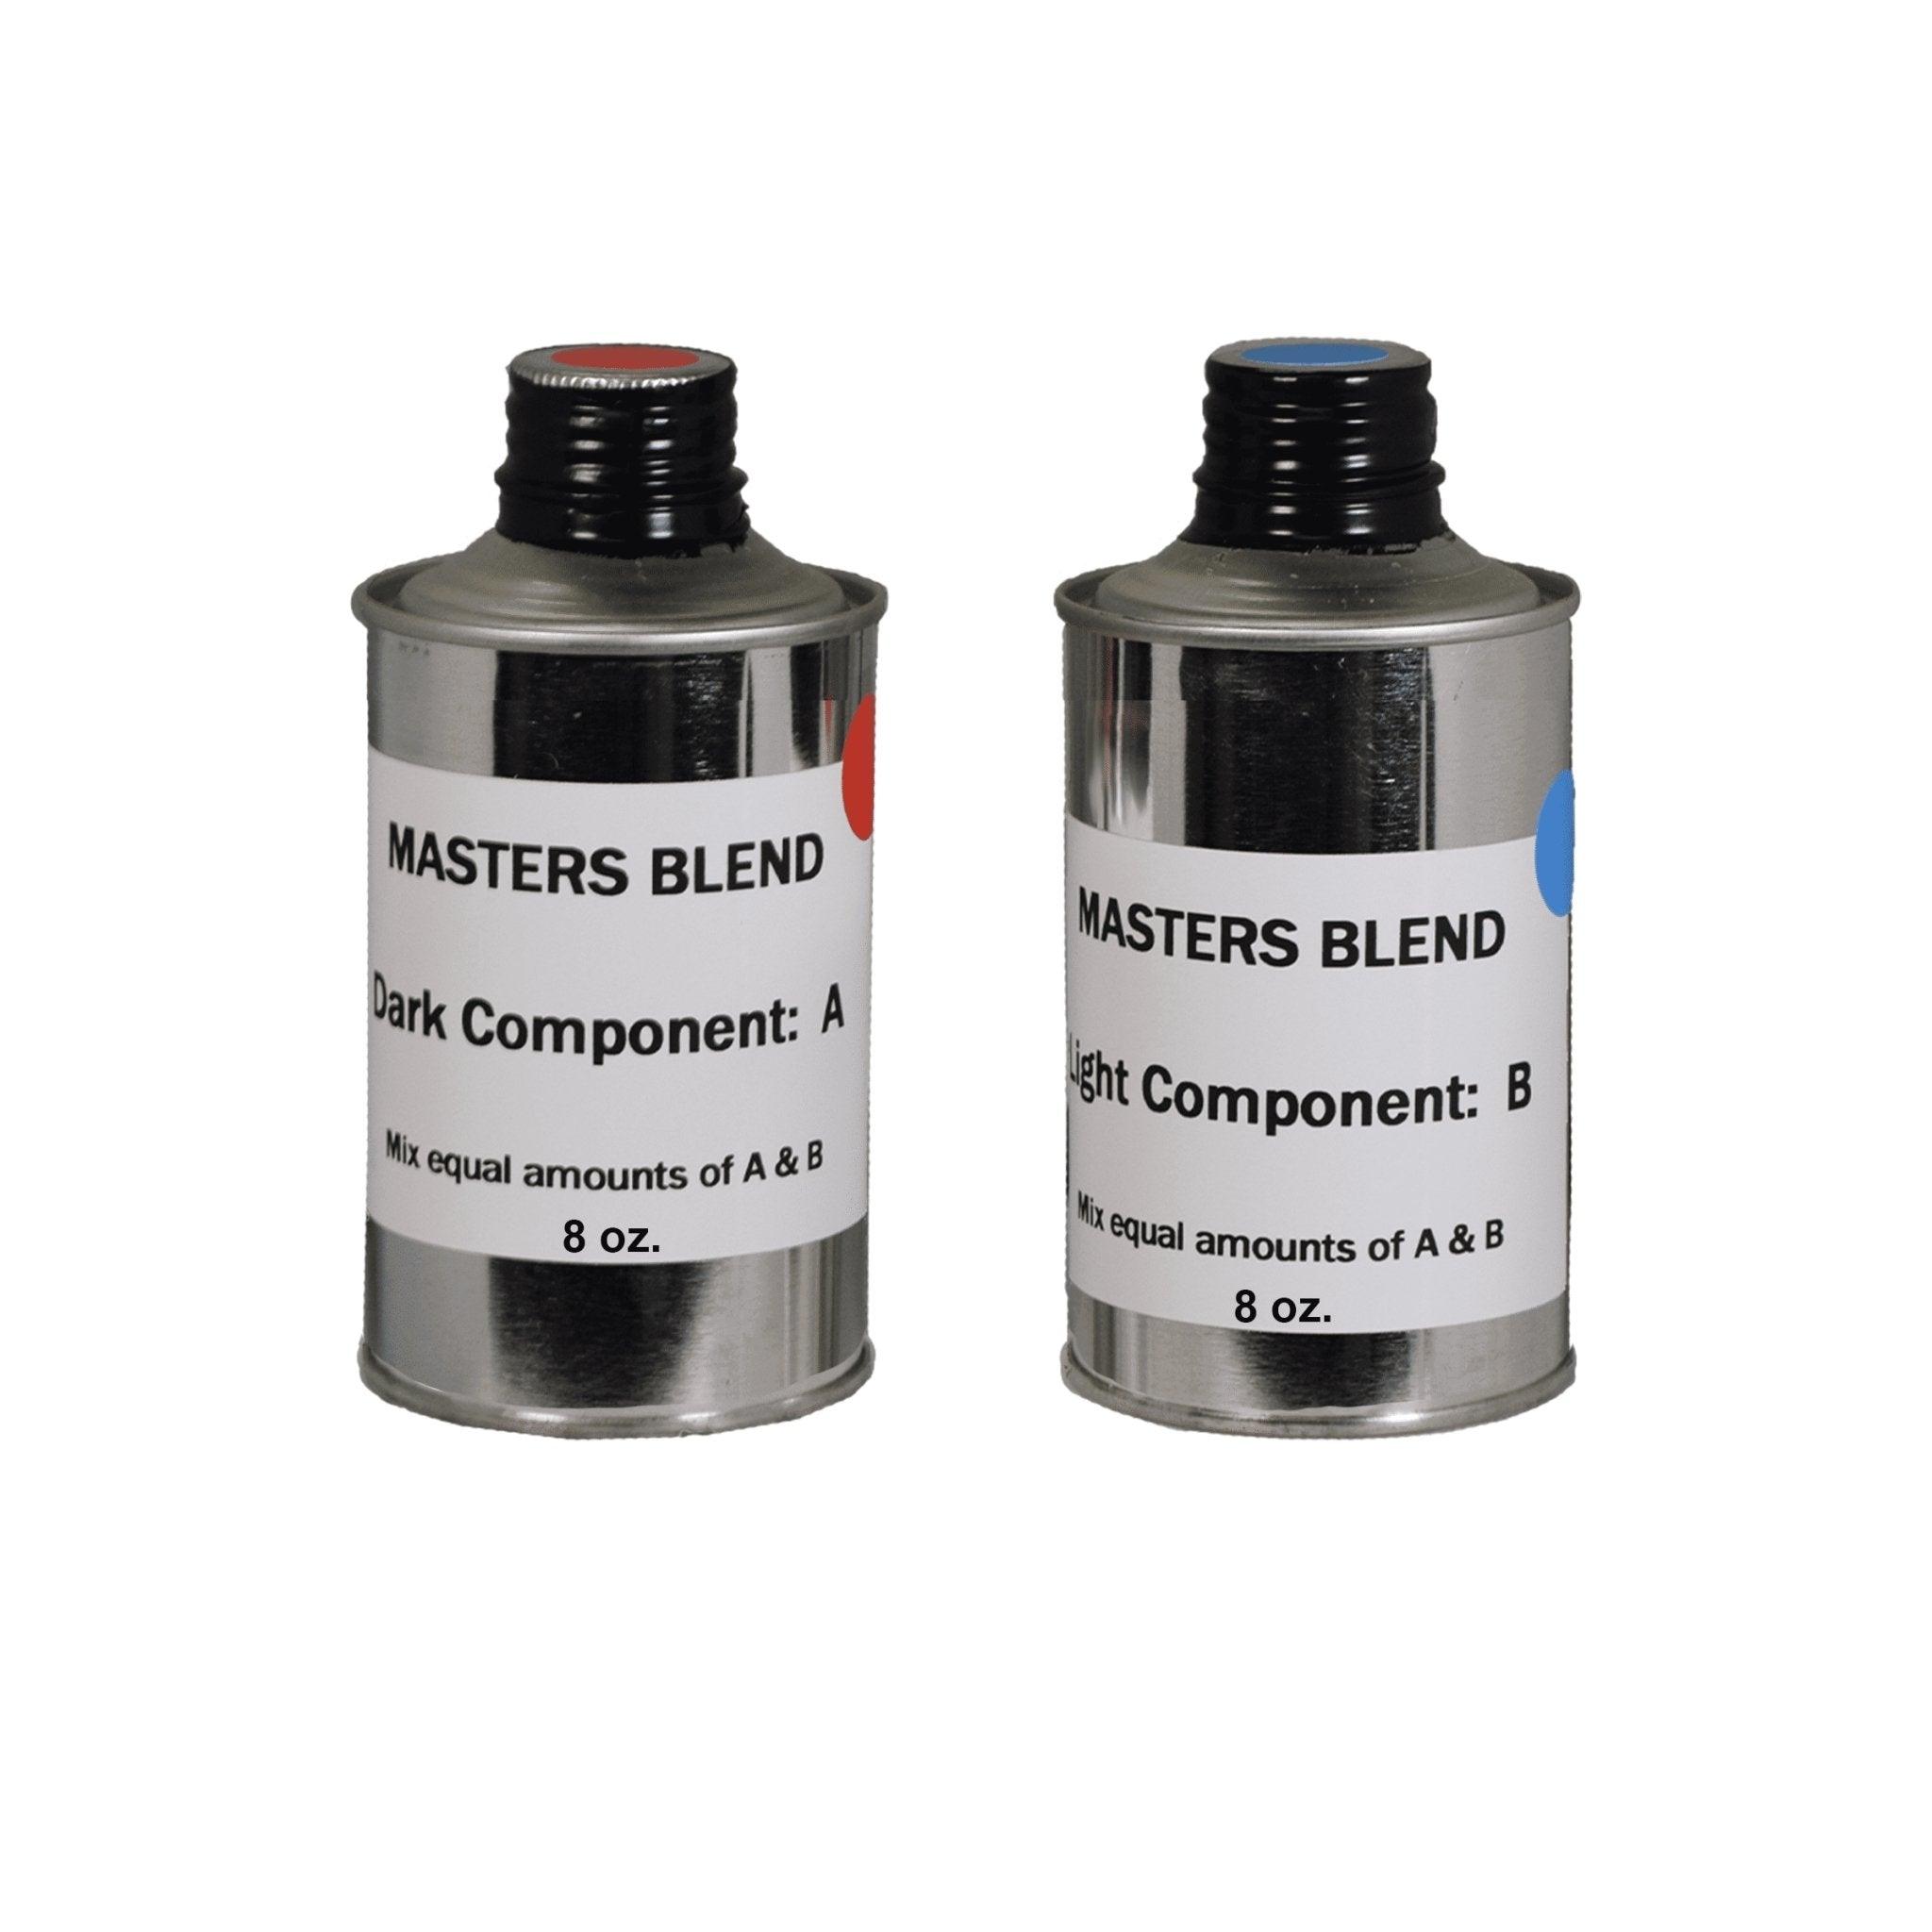 Masters Blend Kit (Original) - Matuska Taxidermy Supply Company